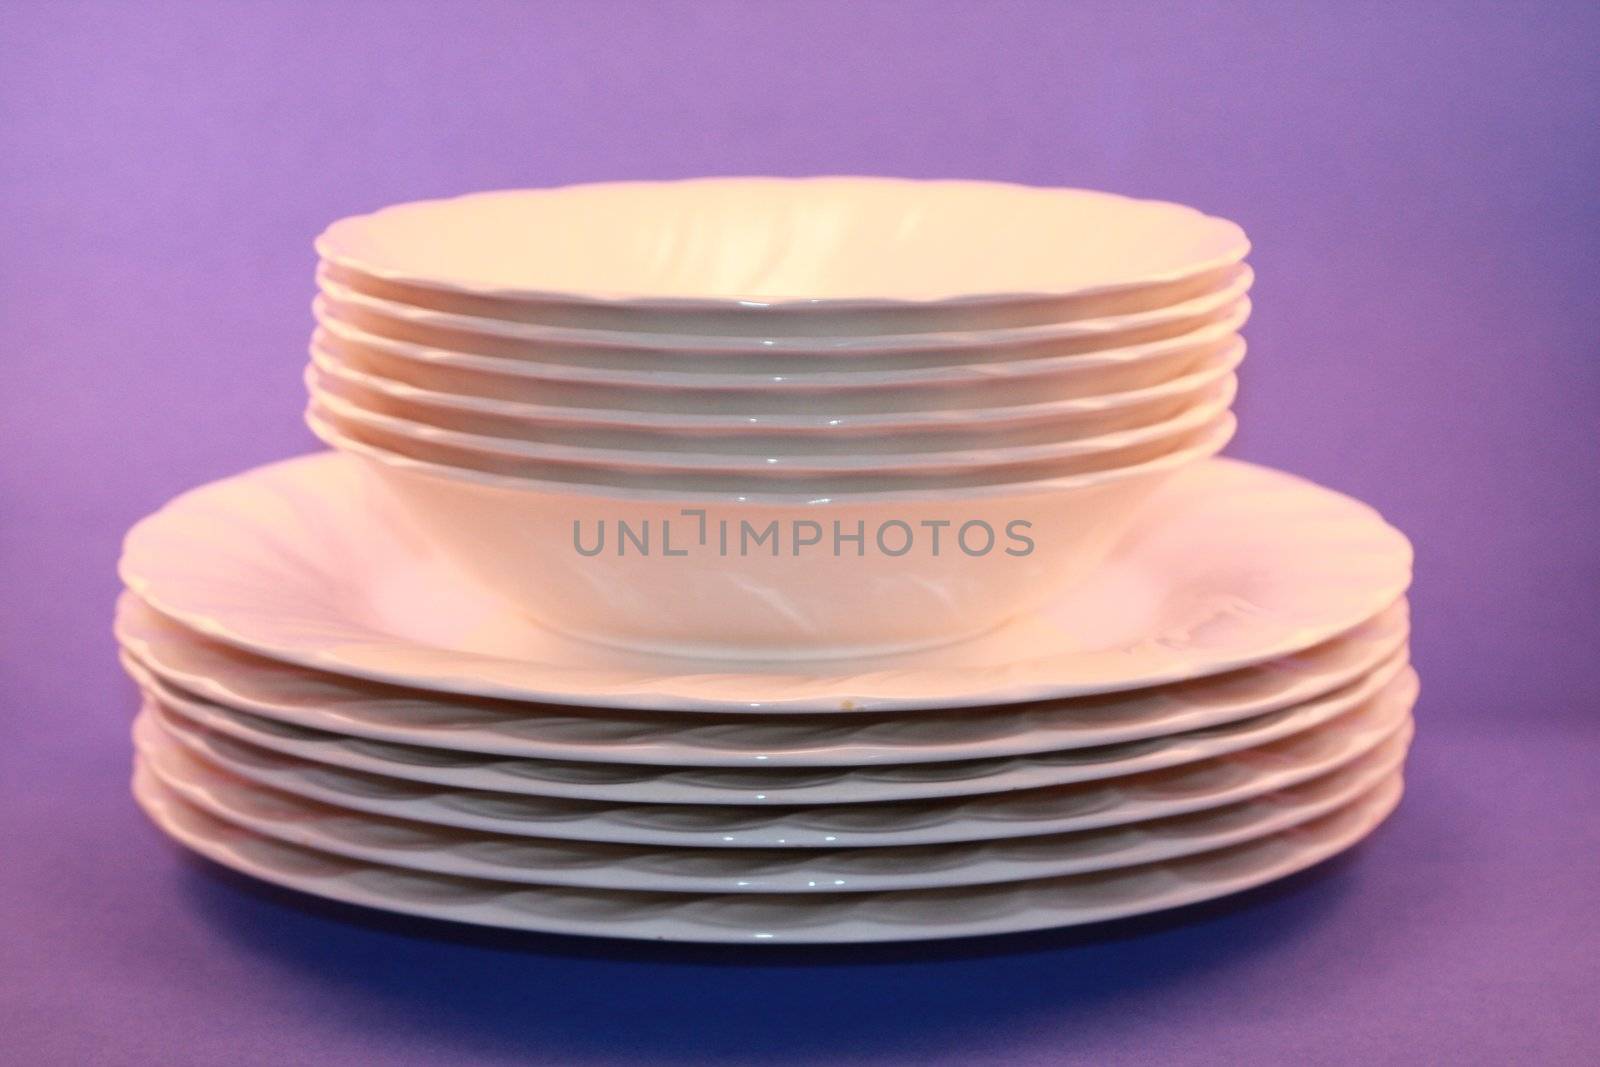 White Dinner Plates on Blue Background by knktucker